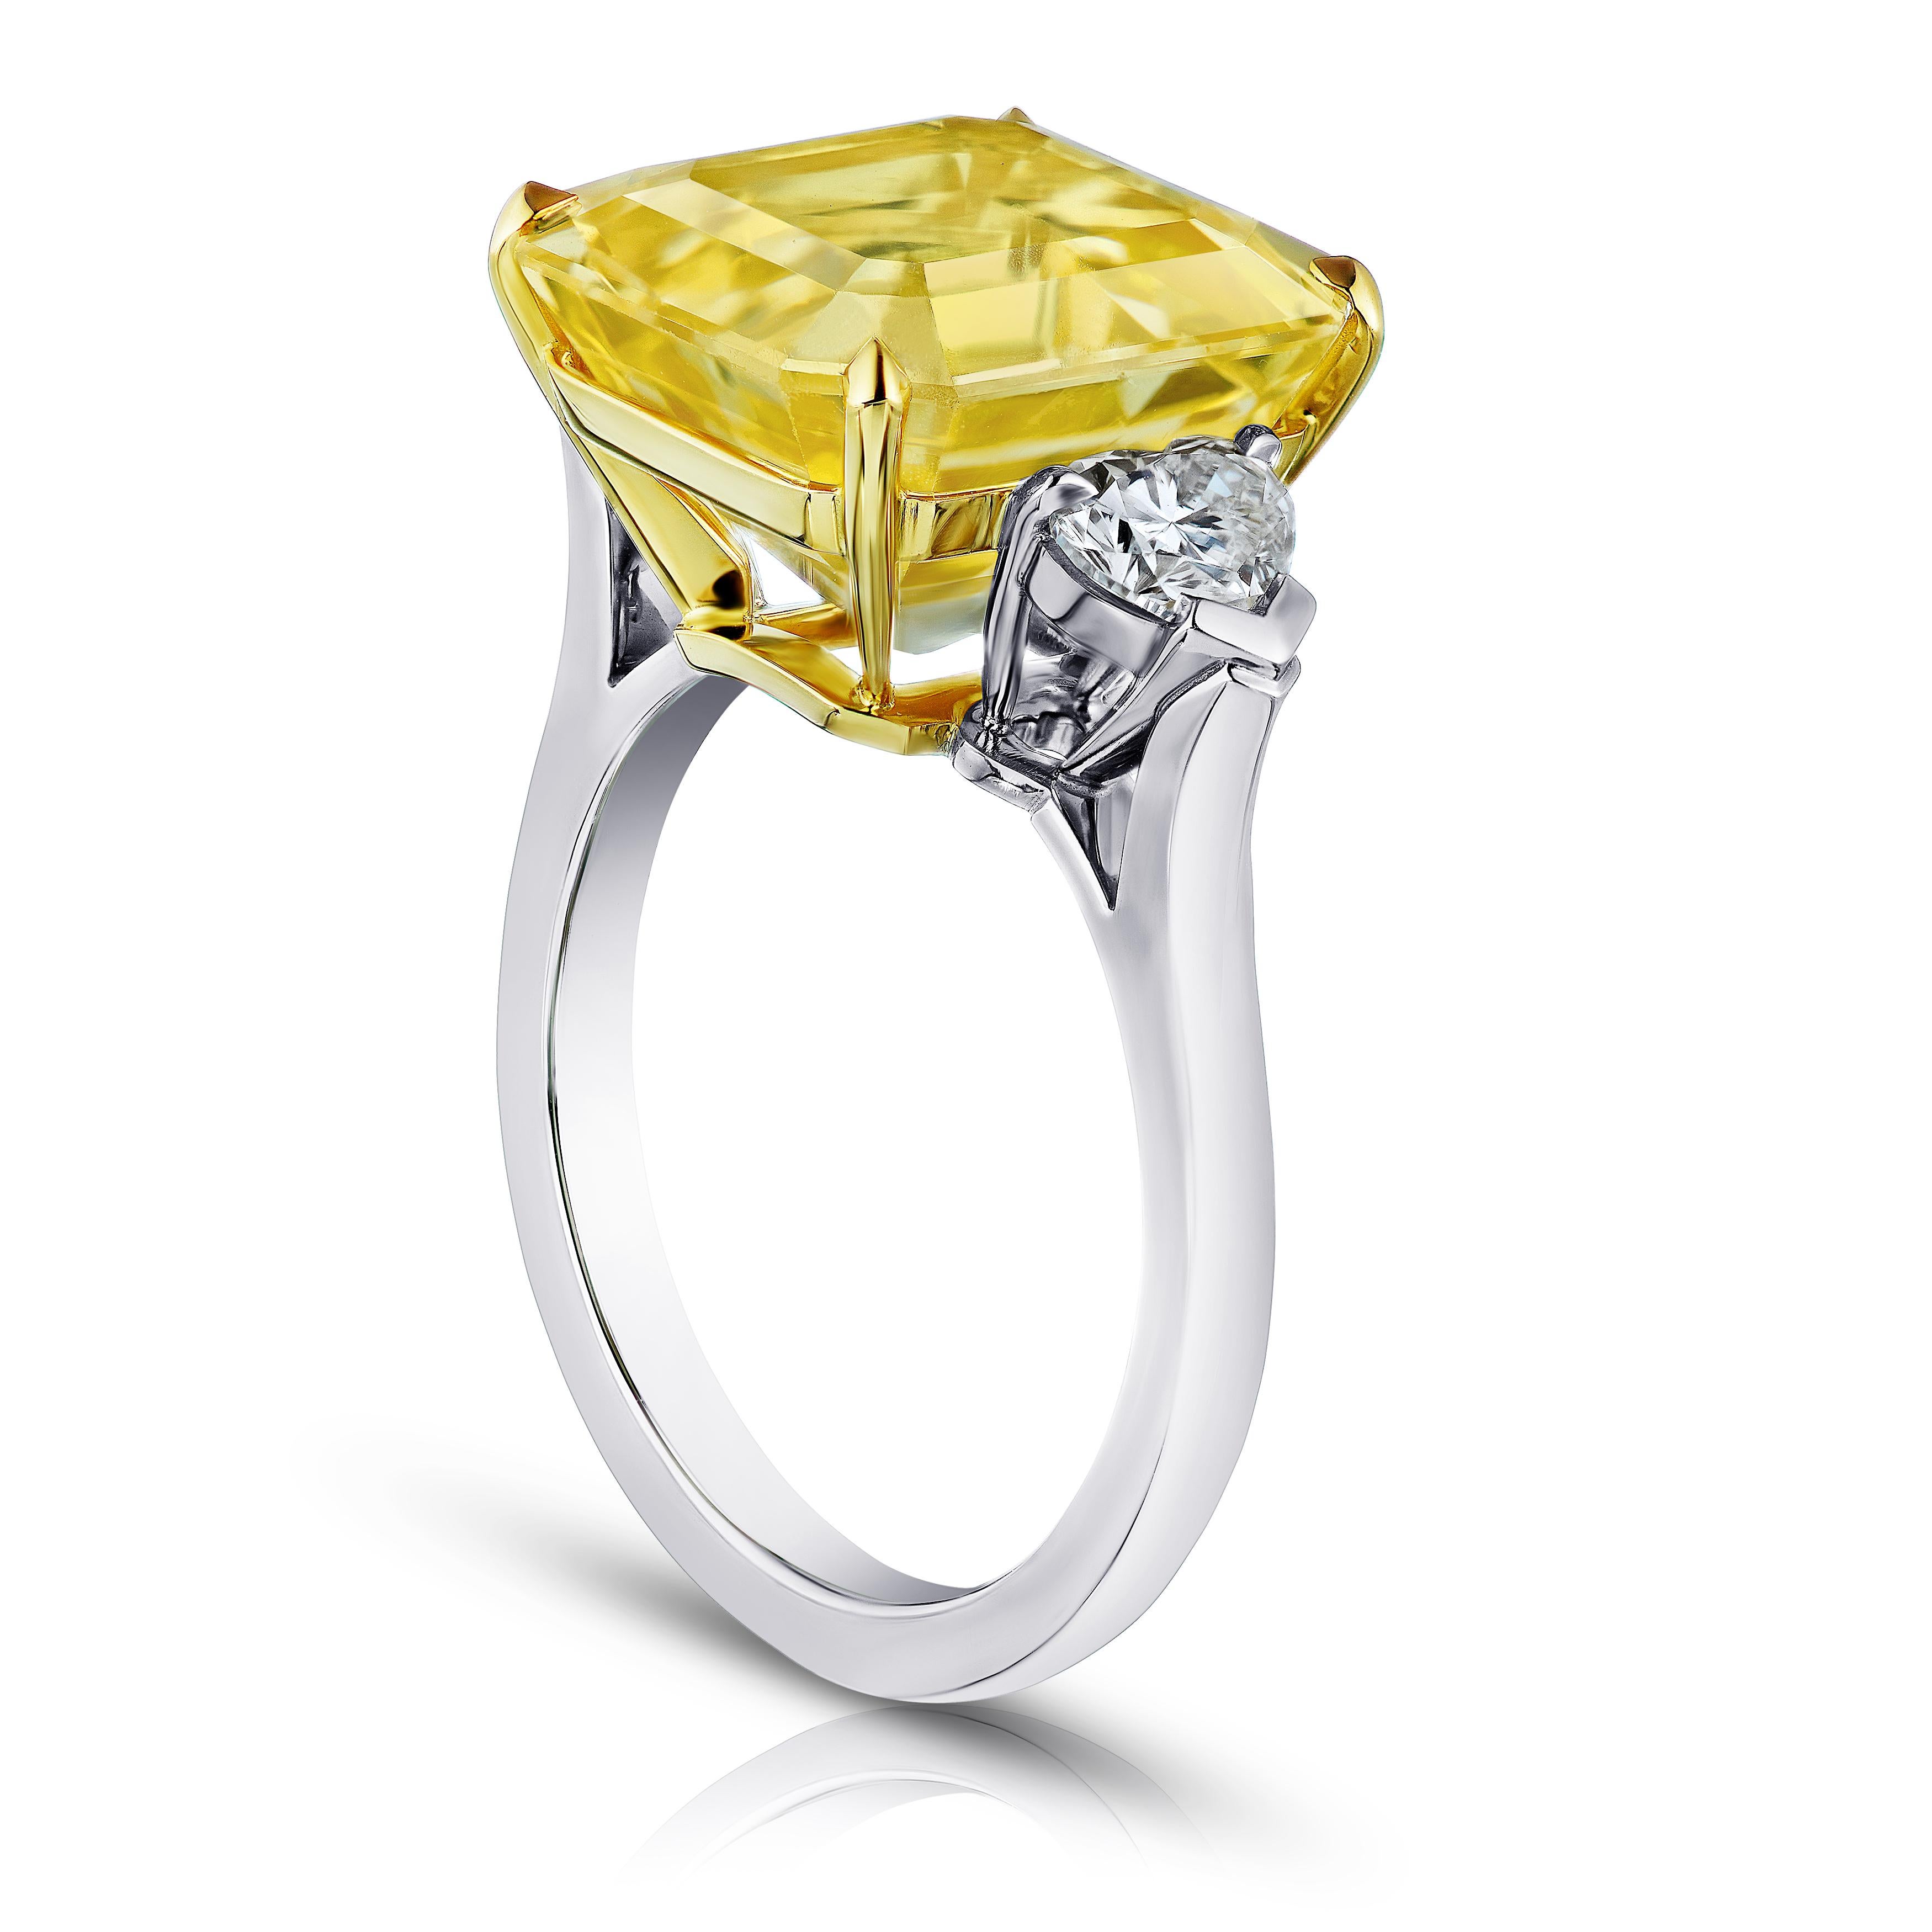 13.28 Carat Asscher Cut (natural no heat) Yellow Sapphire with heart shape diamonds .80 carats set in a handmade platinum with 18k yellow gold ring